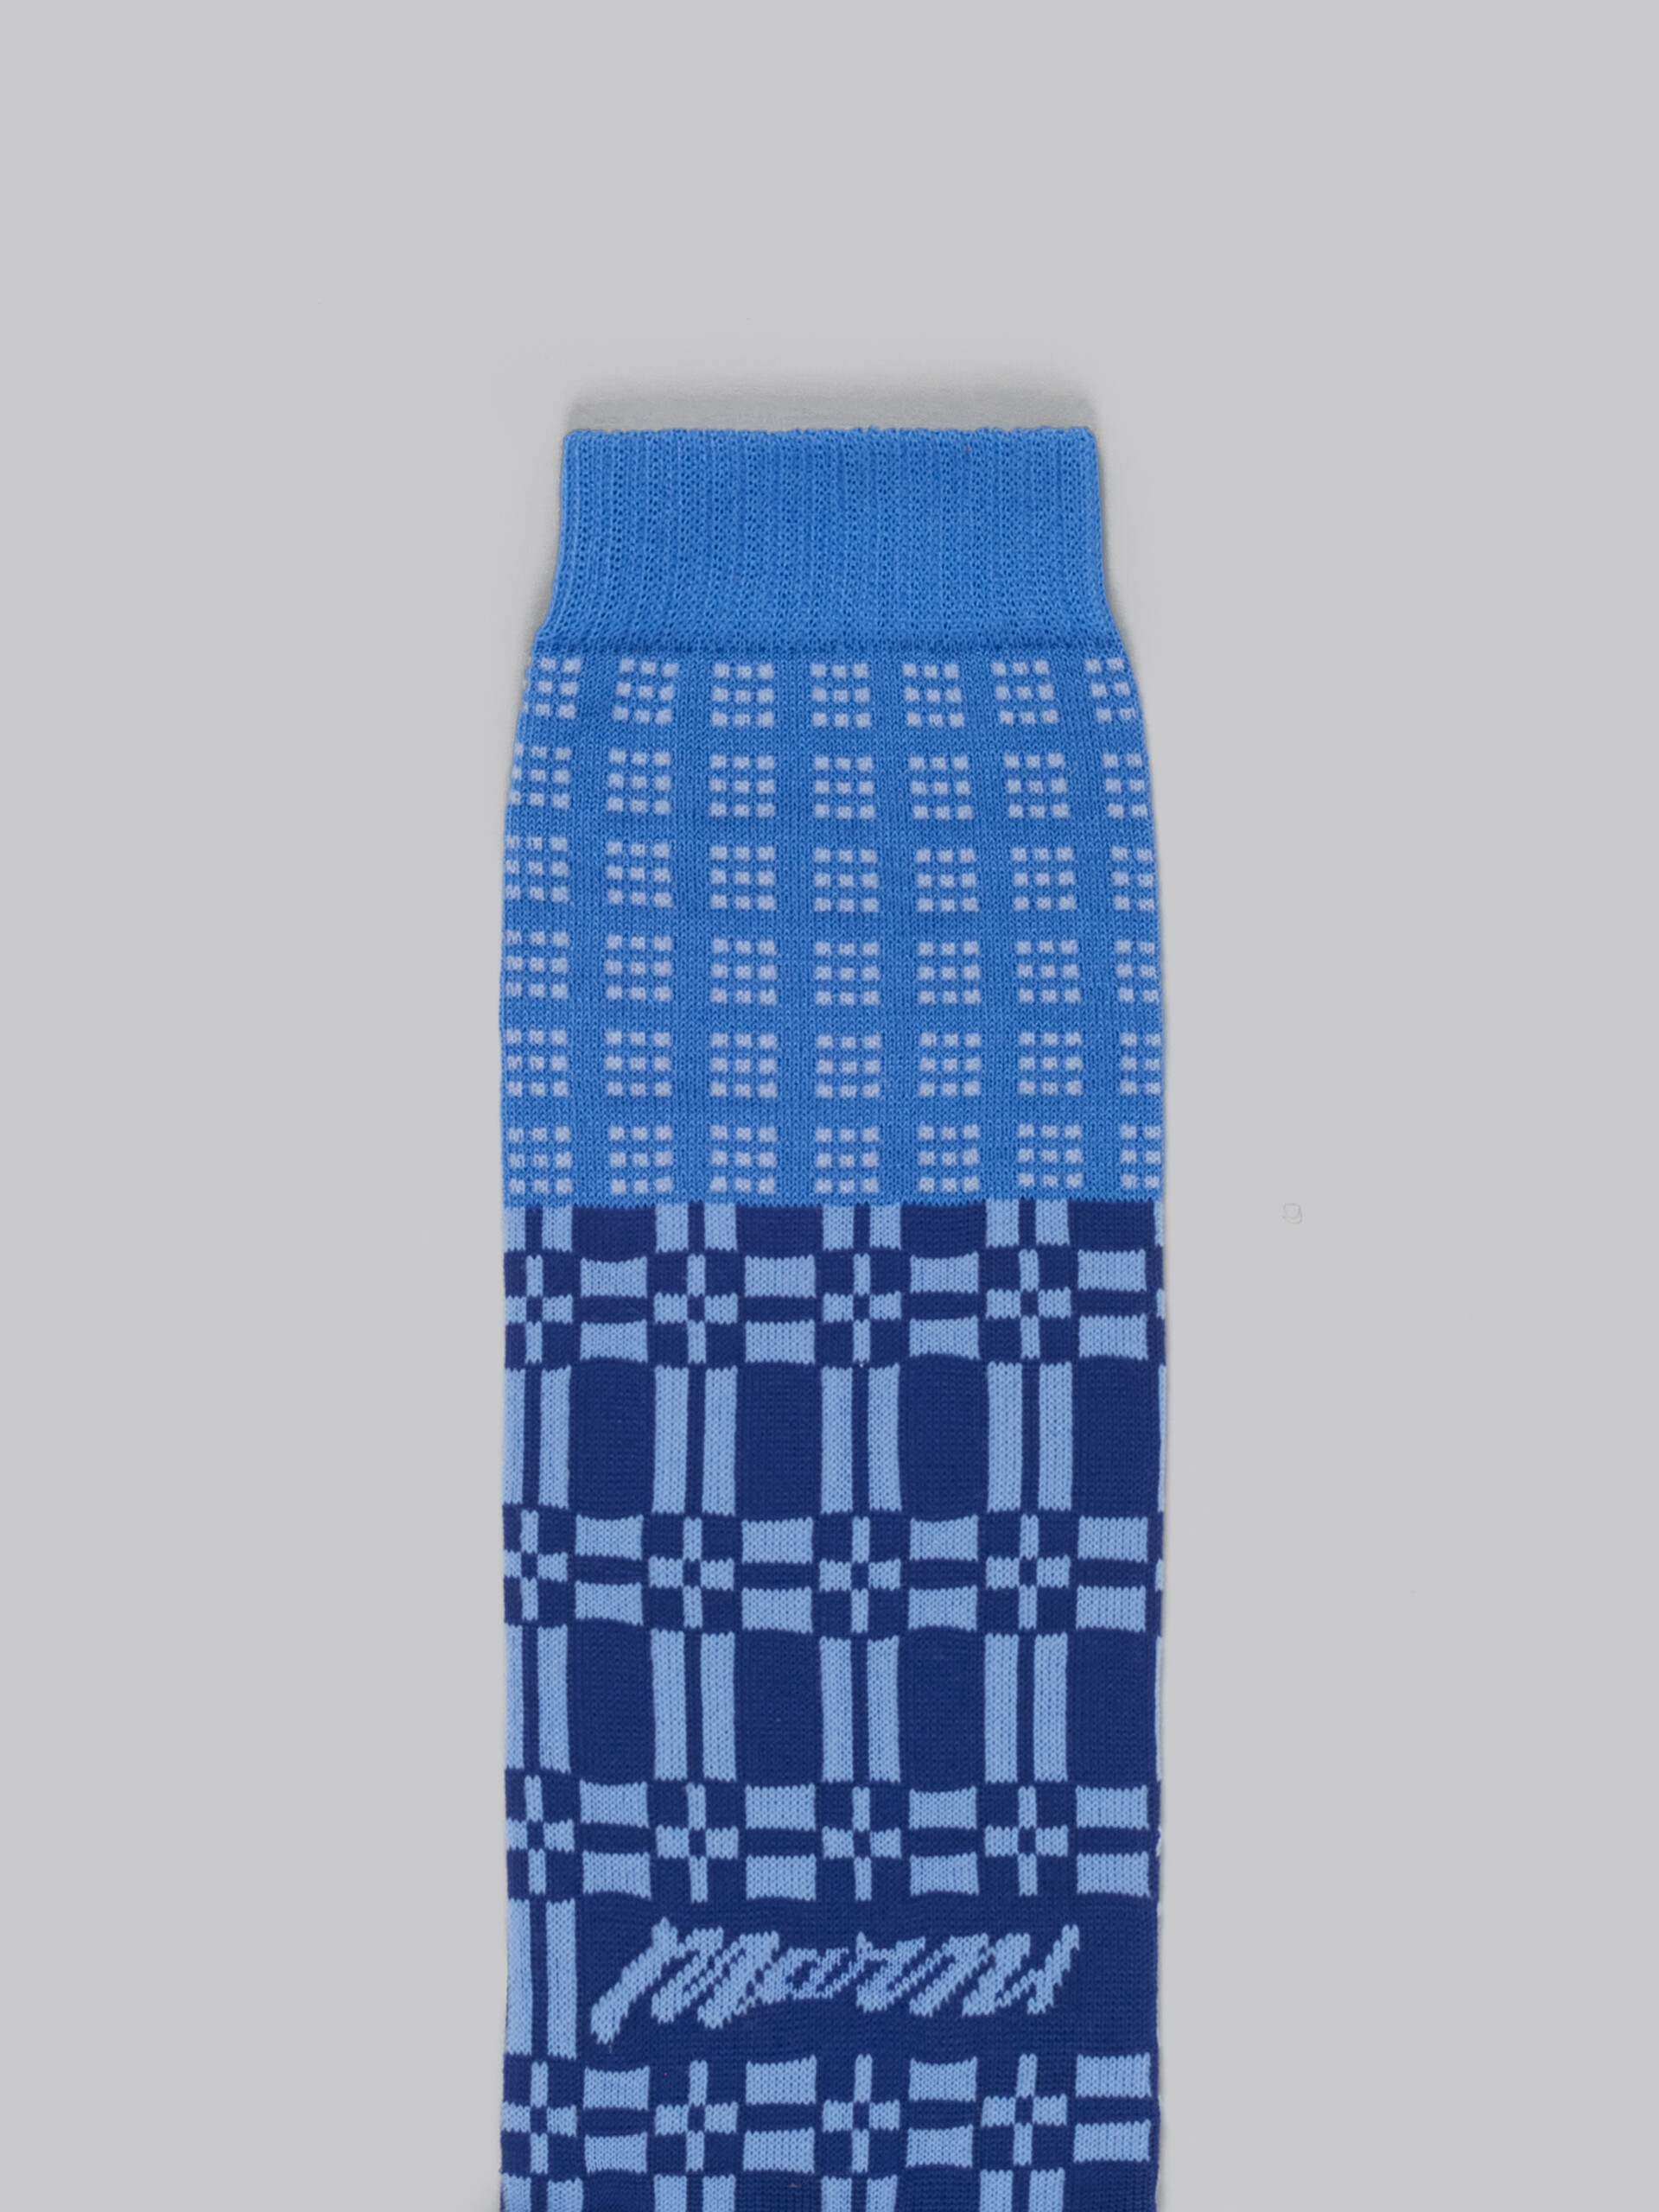 Blue socks with geometric patterns - Socks - Image 3